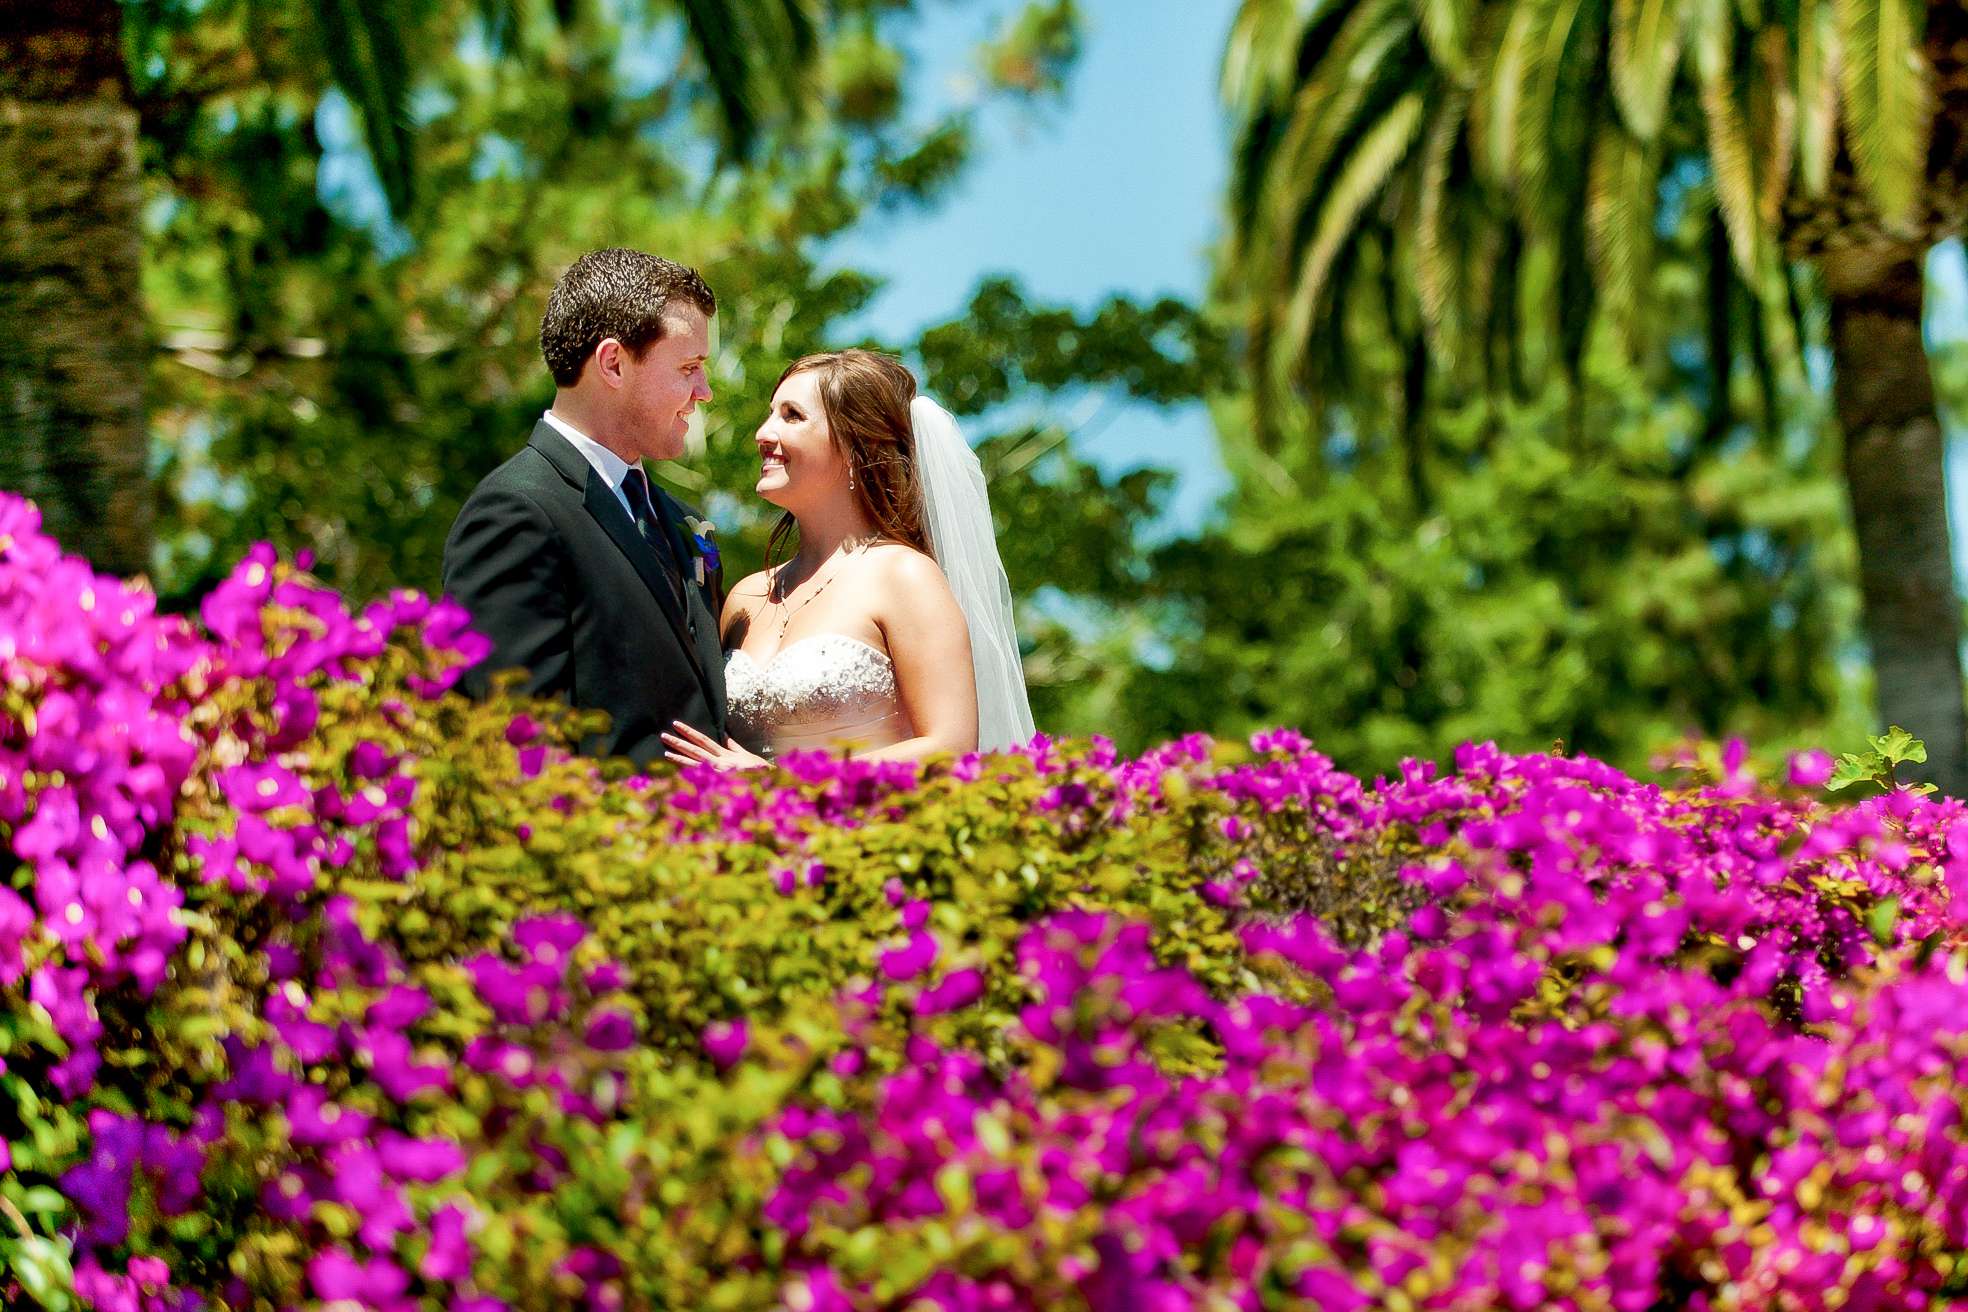 Tustin Ranch Golf Club Wedding, Candice and Javier Wedding Photo #1 by True Photography